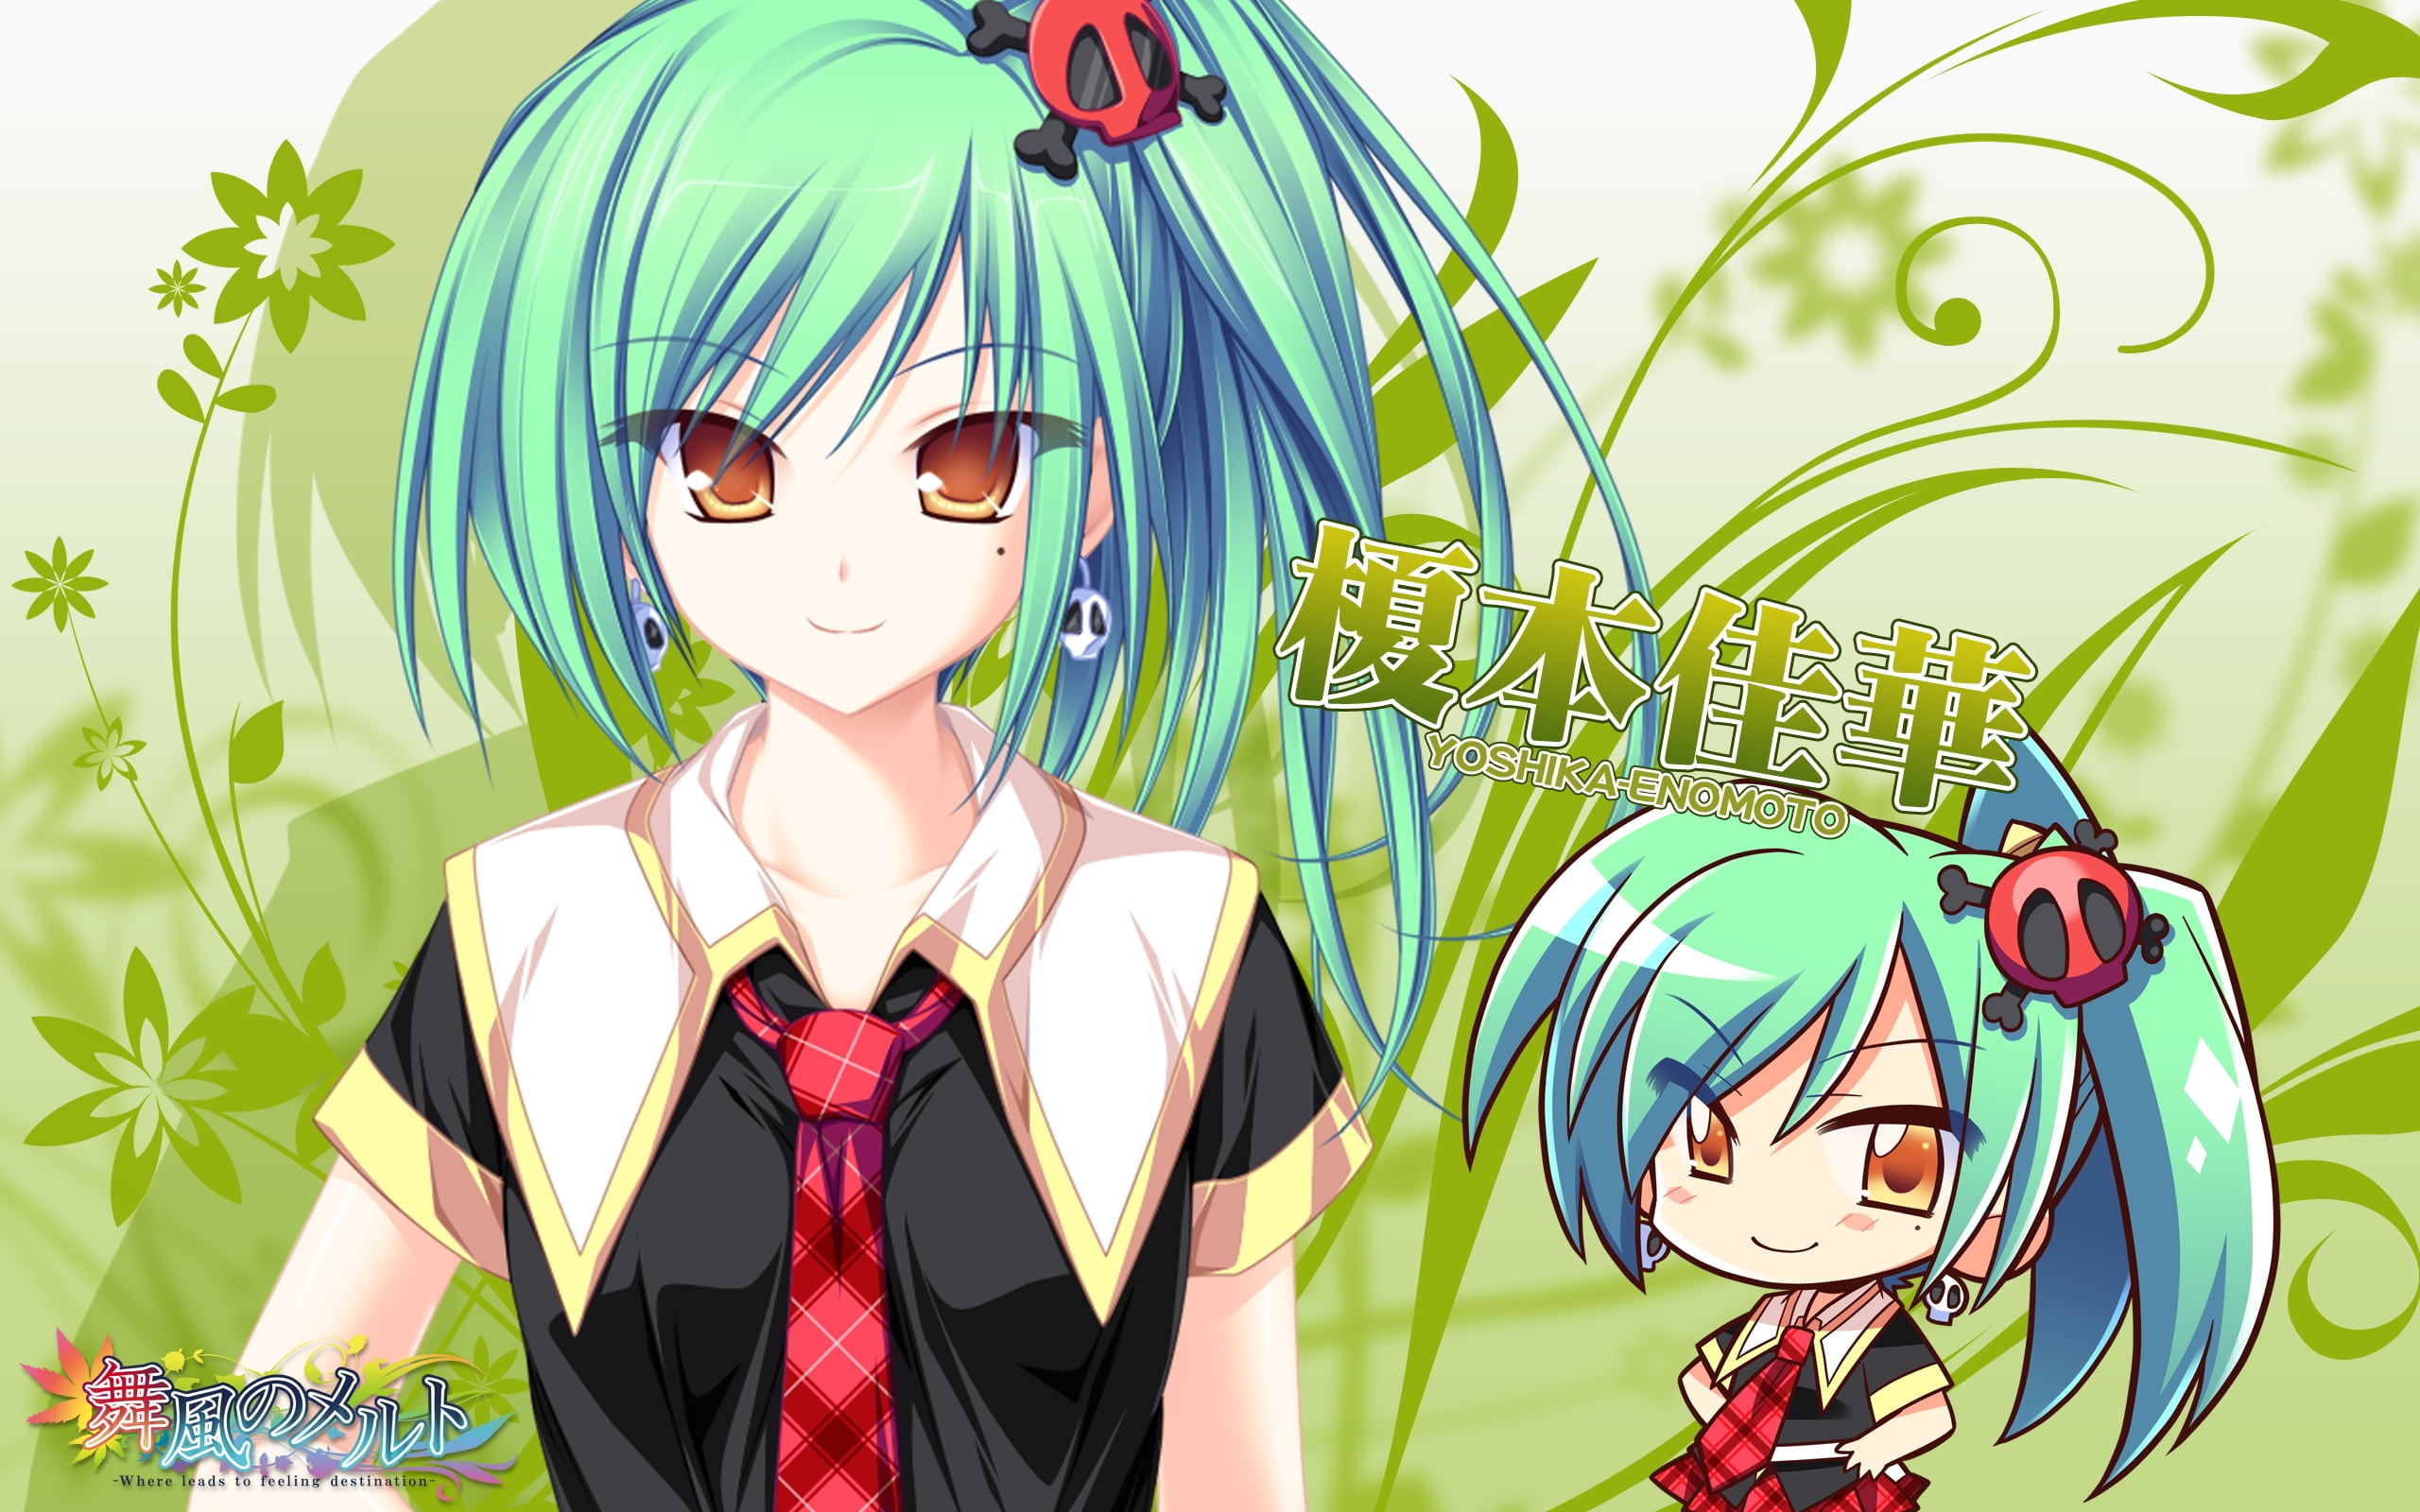 GreenTurquoise Haired Anime Characters  Anime Fan Art 34758254  Fanpop